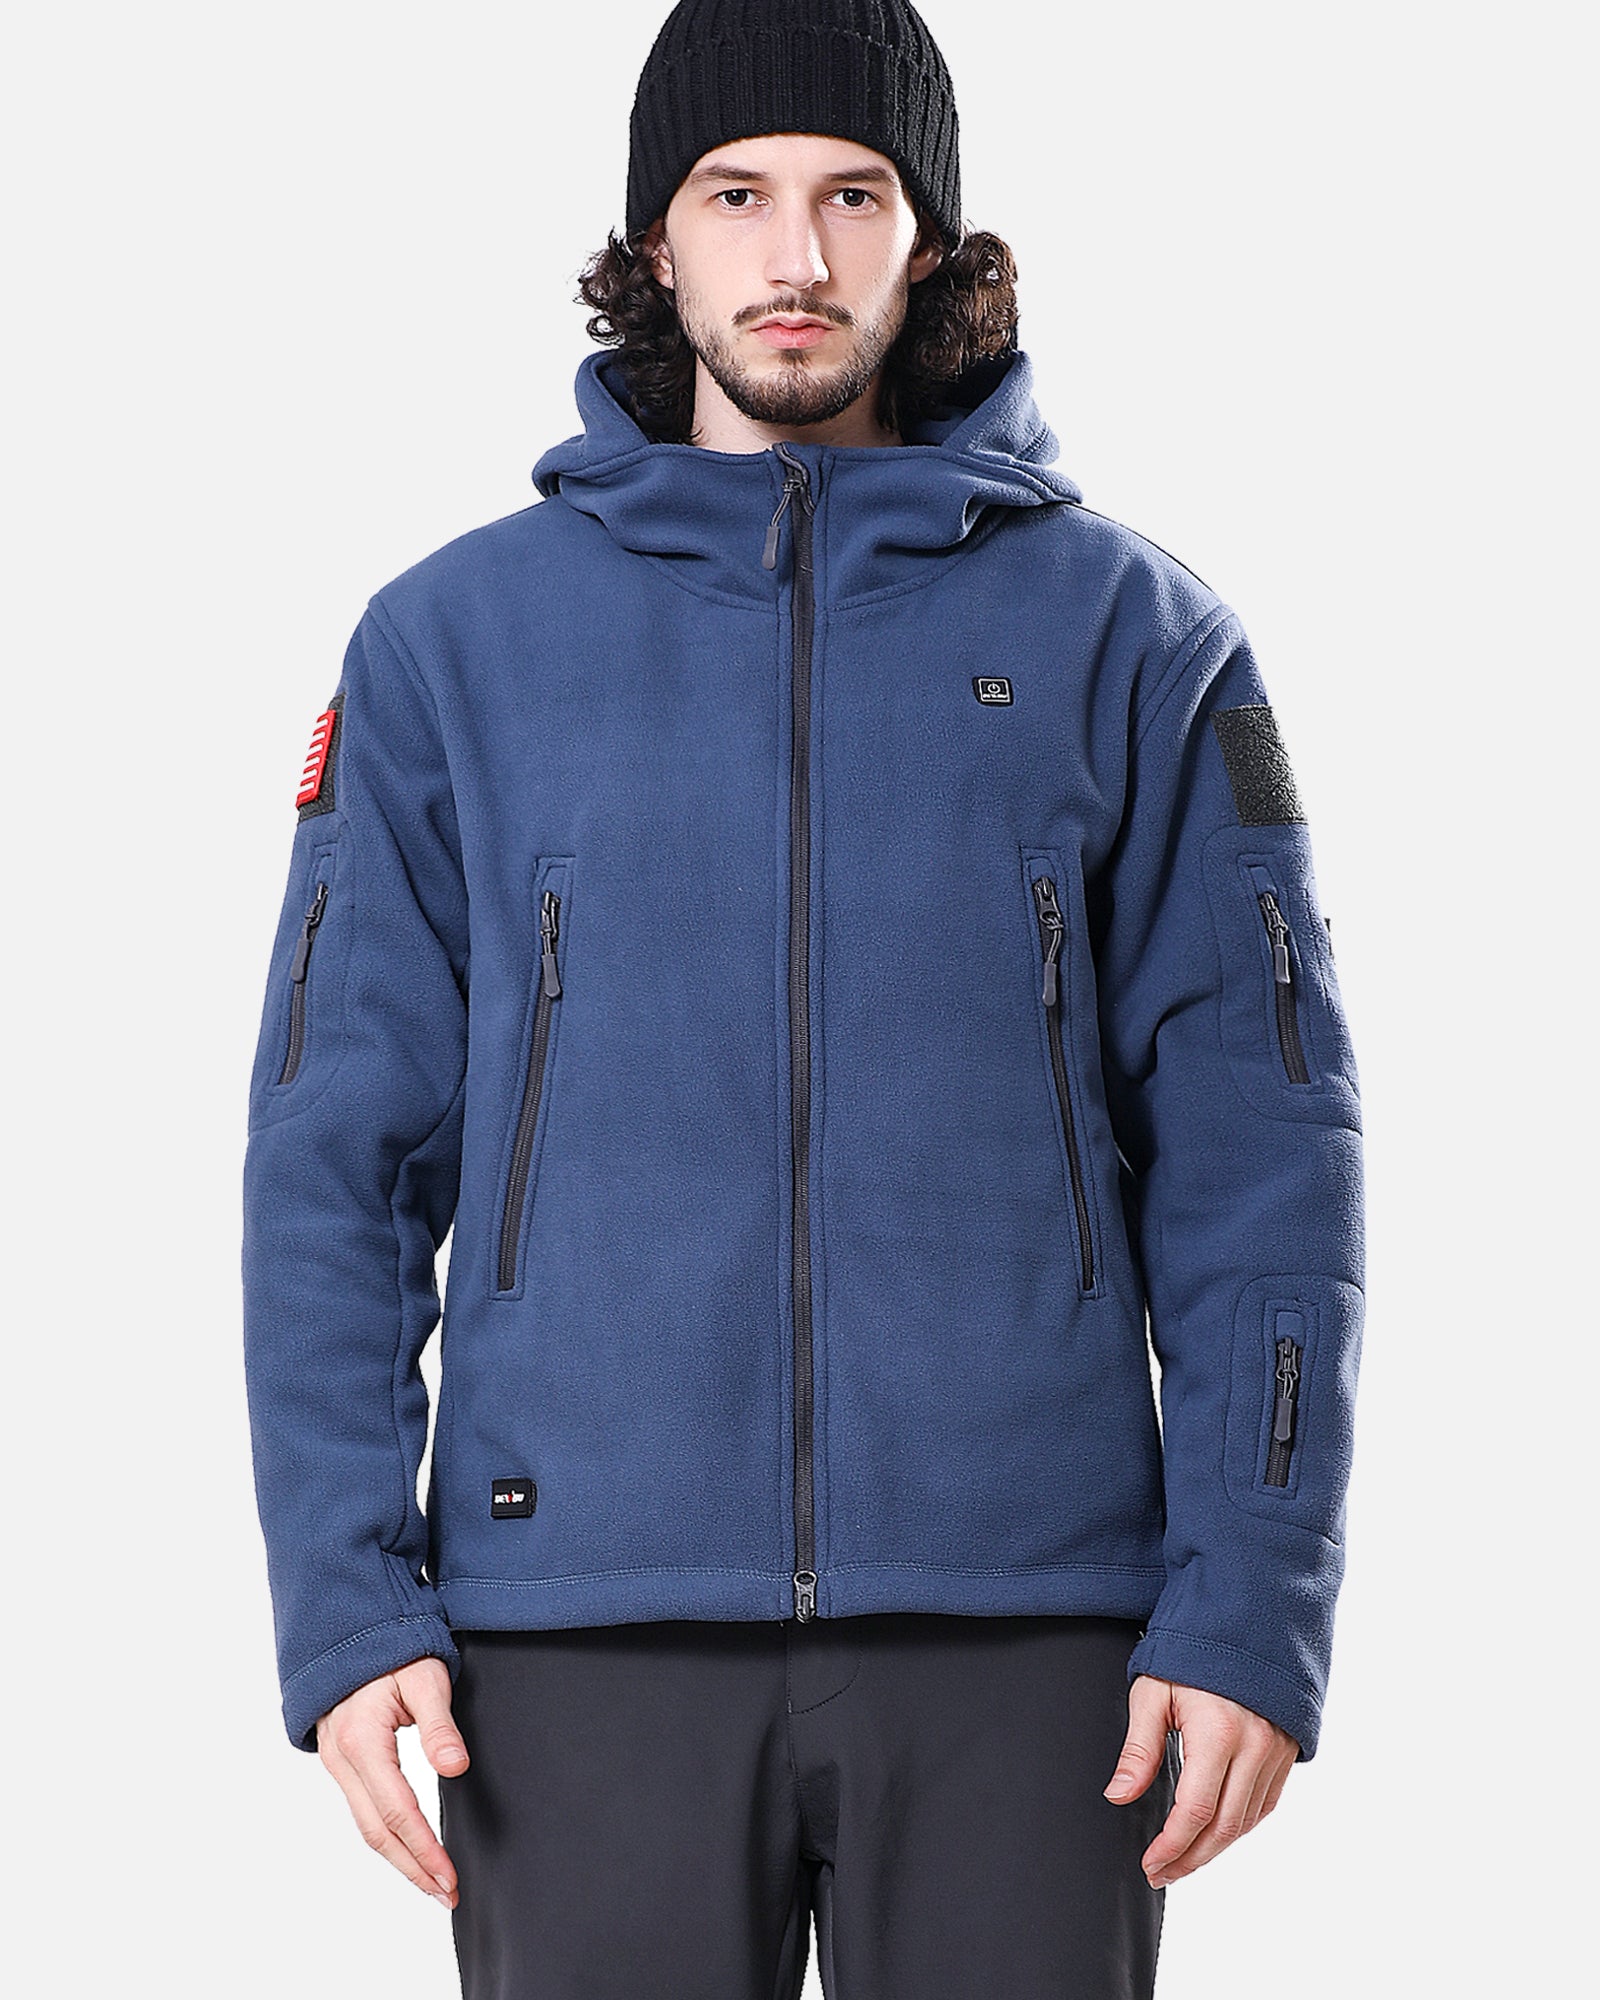 DEWBU® Men's Polar Fleece Heated Jacket With 12V Battery Pack - Blue Haze